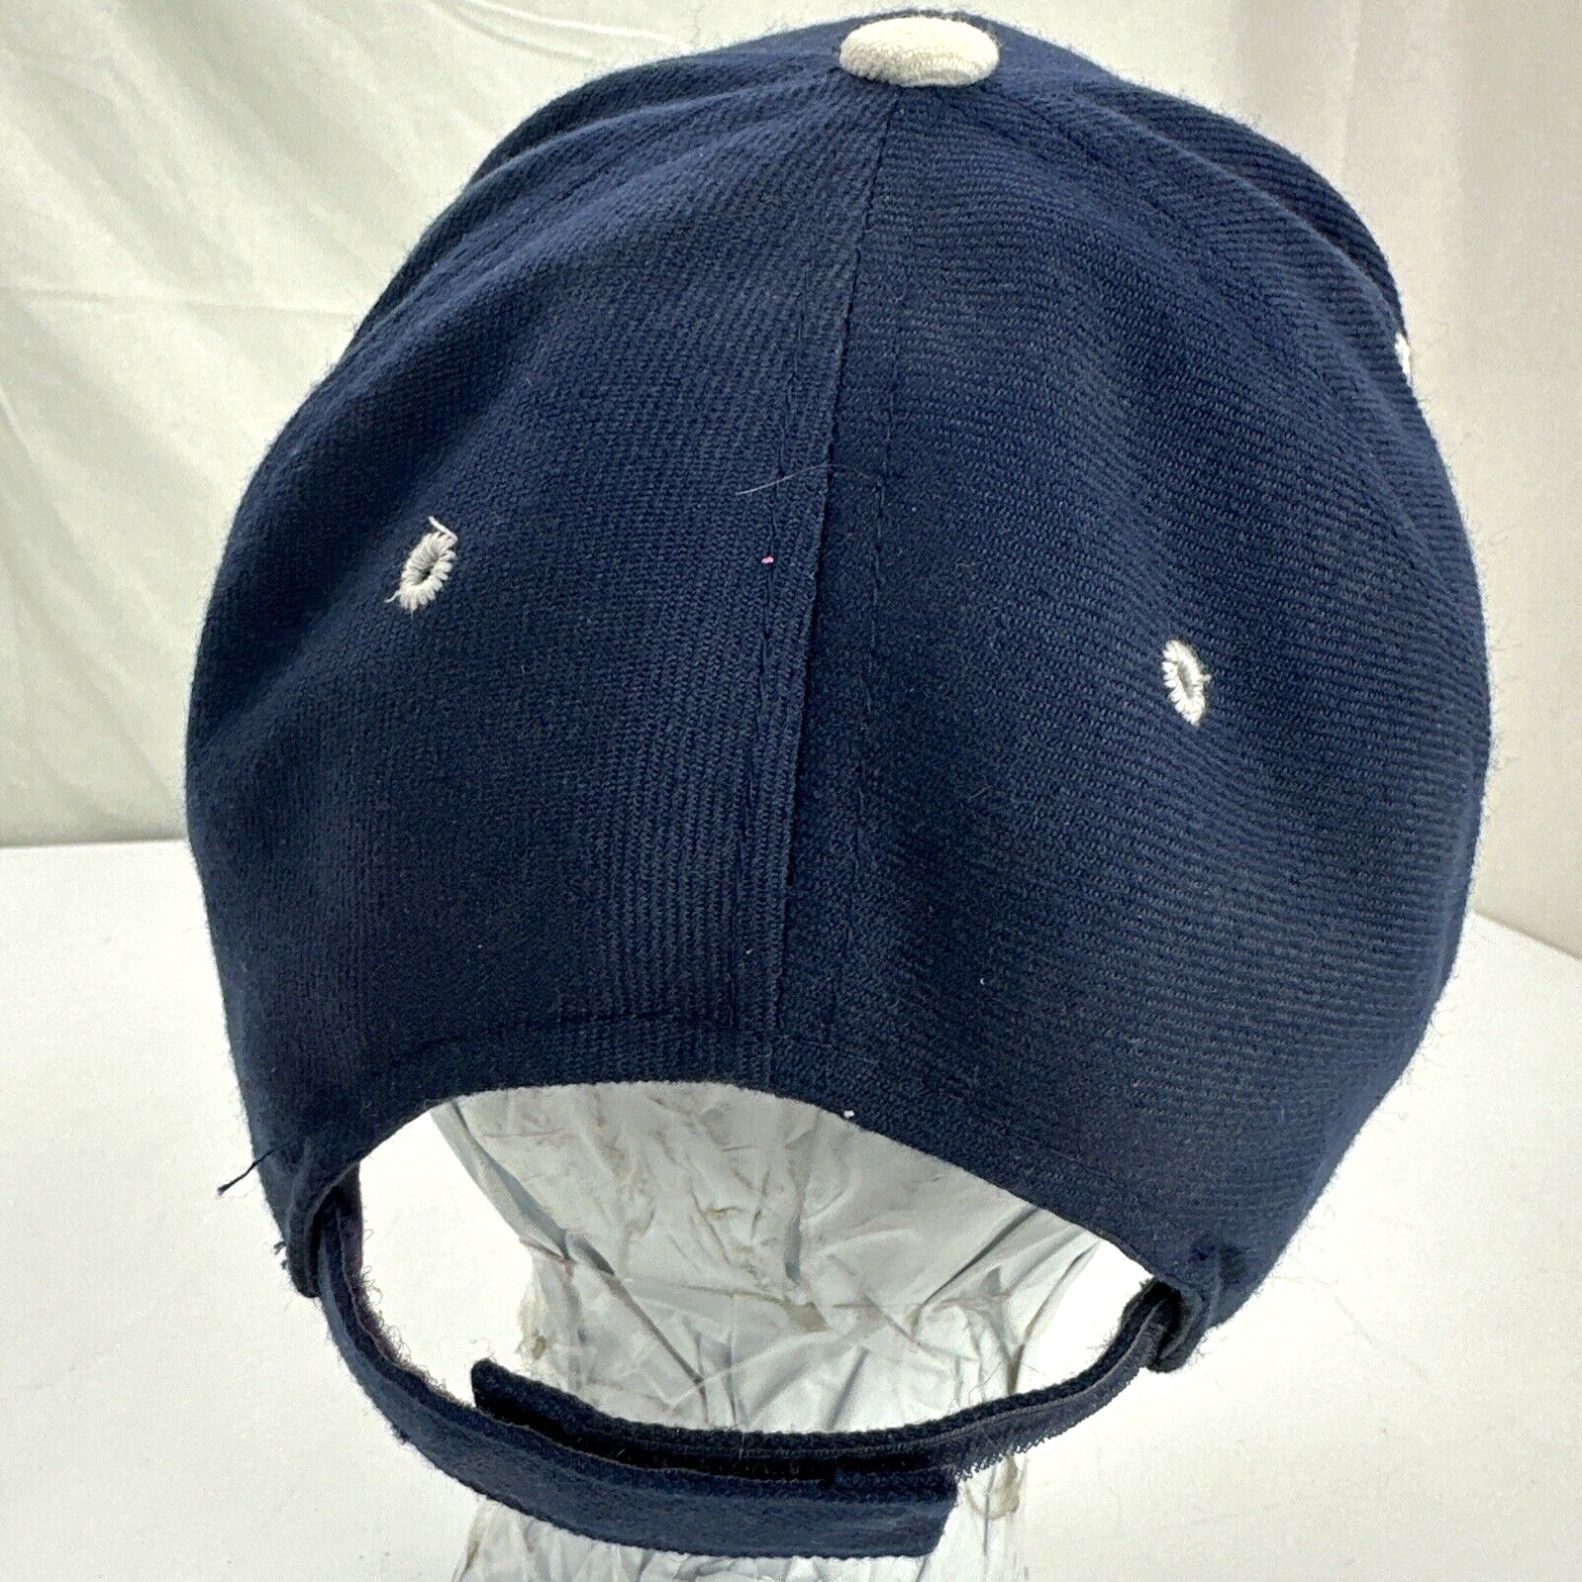 AriZona Lake Havasu Arizona Ball Cap Hat Adjustable Baseball | Grailed